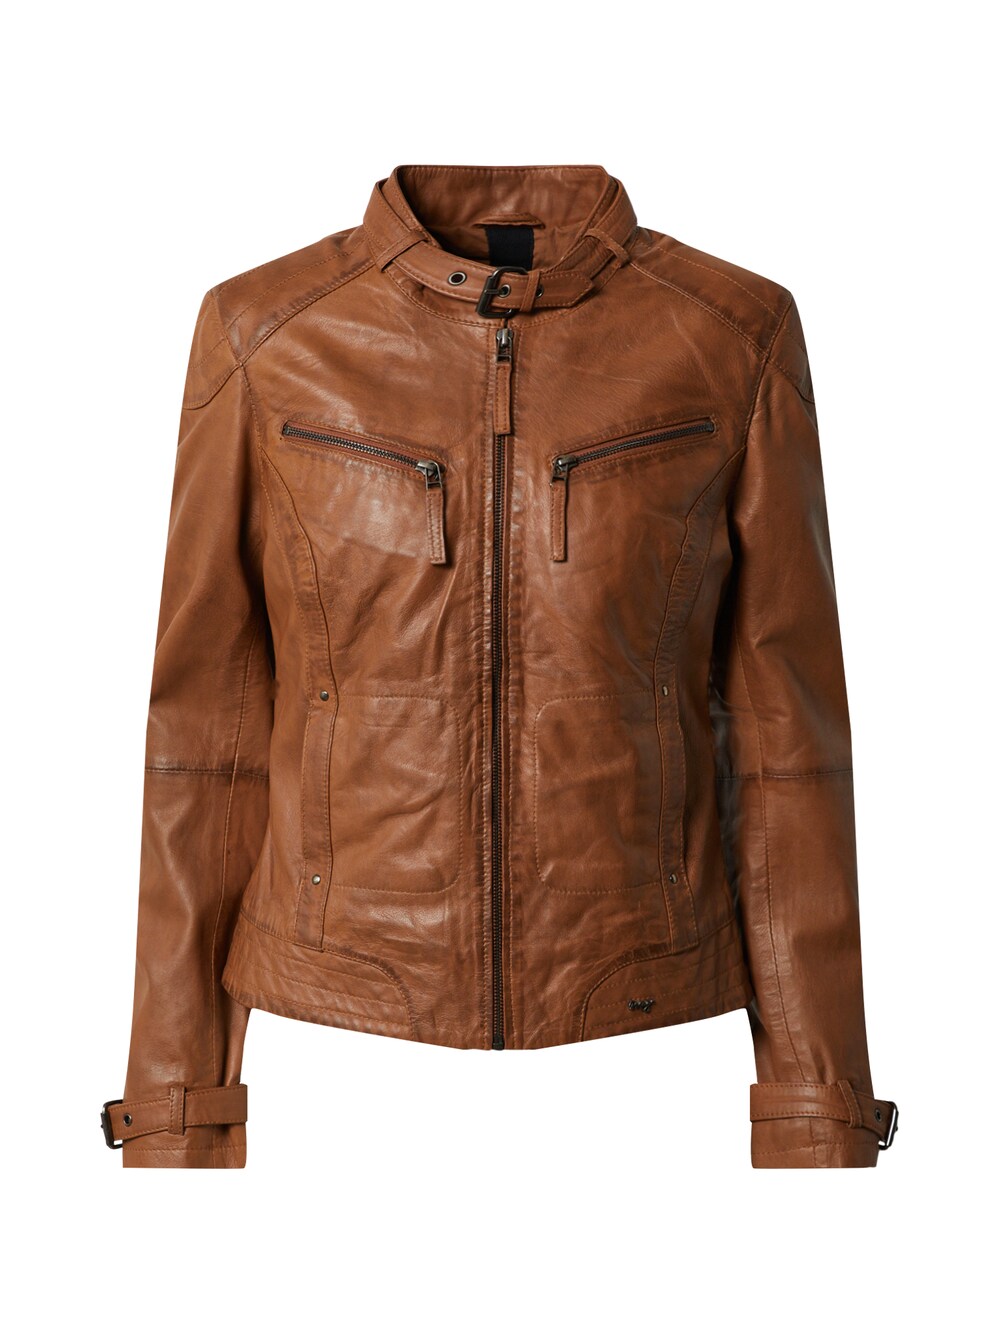 Межсезонная куртка Maze Ryana, коричневый/коньяк межсезонная куртка mustang ryana коричневый